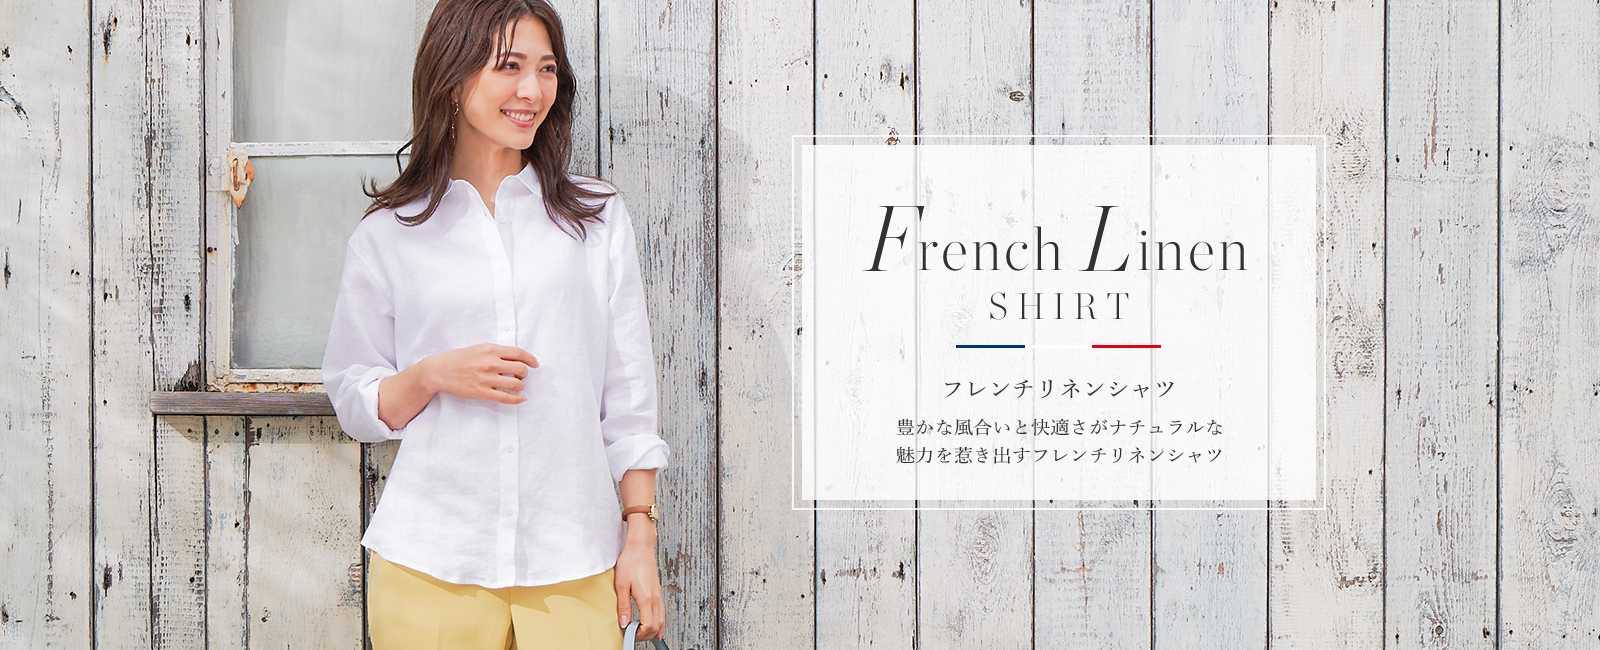 French Linen SHIRT フレンチリネンシャツ 豊かな風合いと快適さがナチュラルな魅力を惹き出すフレンチリネンシャツ